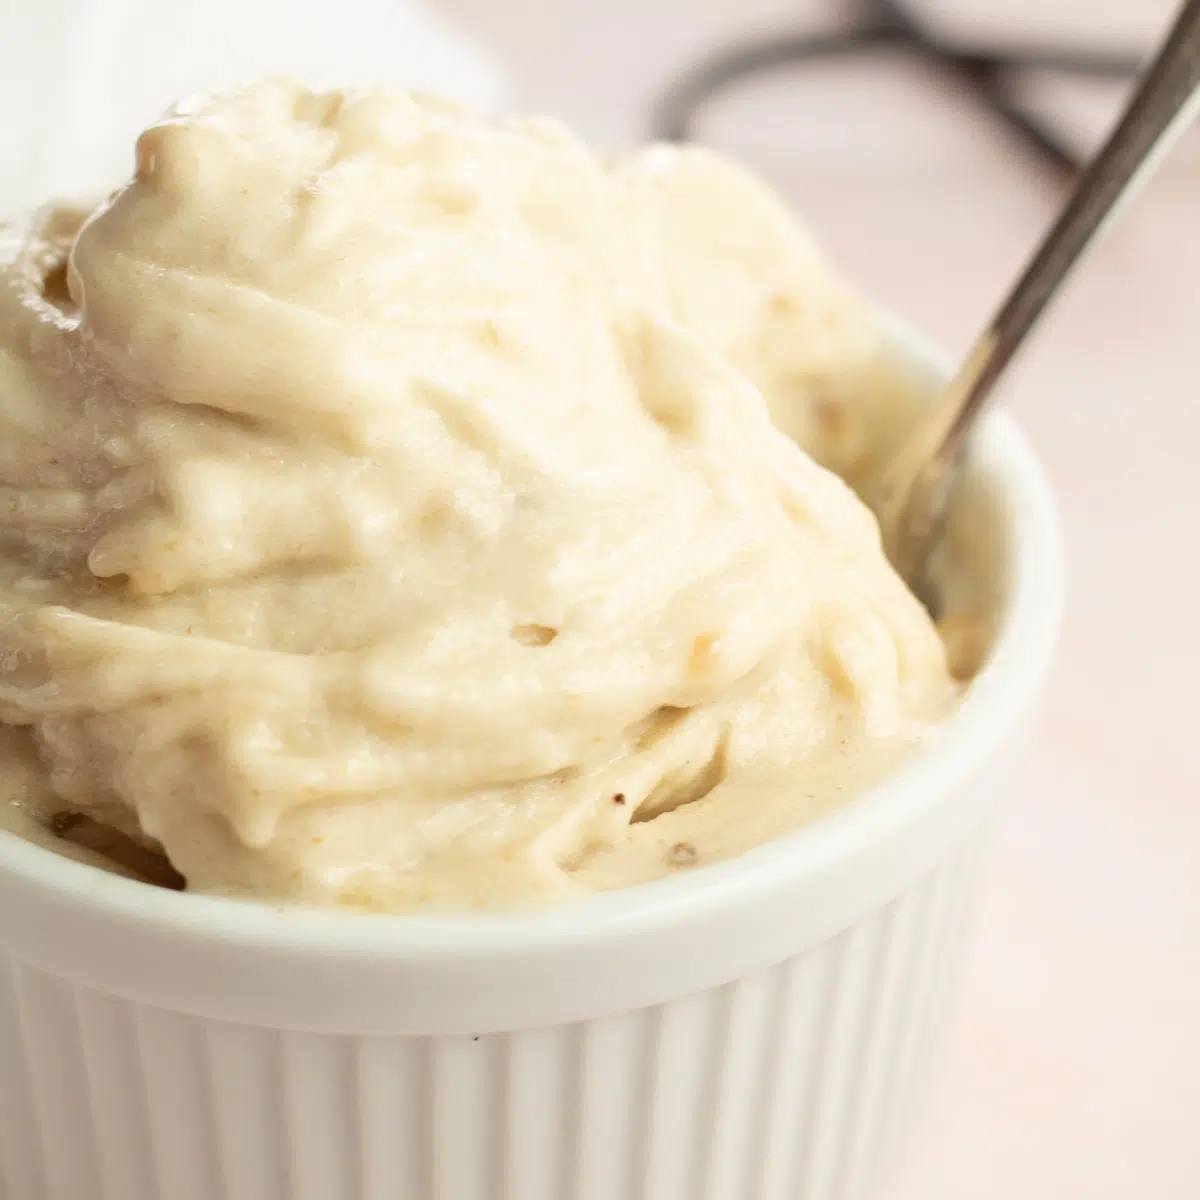 Vanilla nice cream in white ramekin with spoon in the bowl and vanilla bean in background.